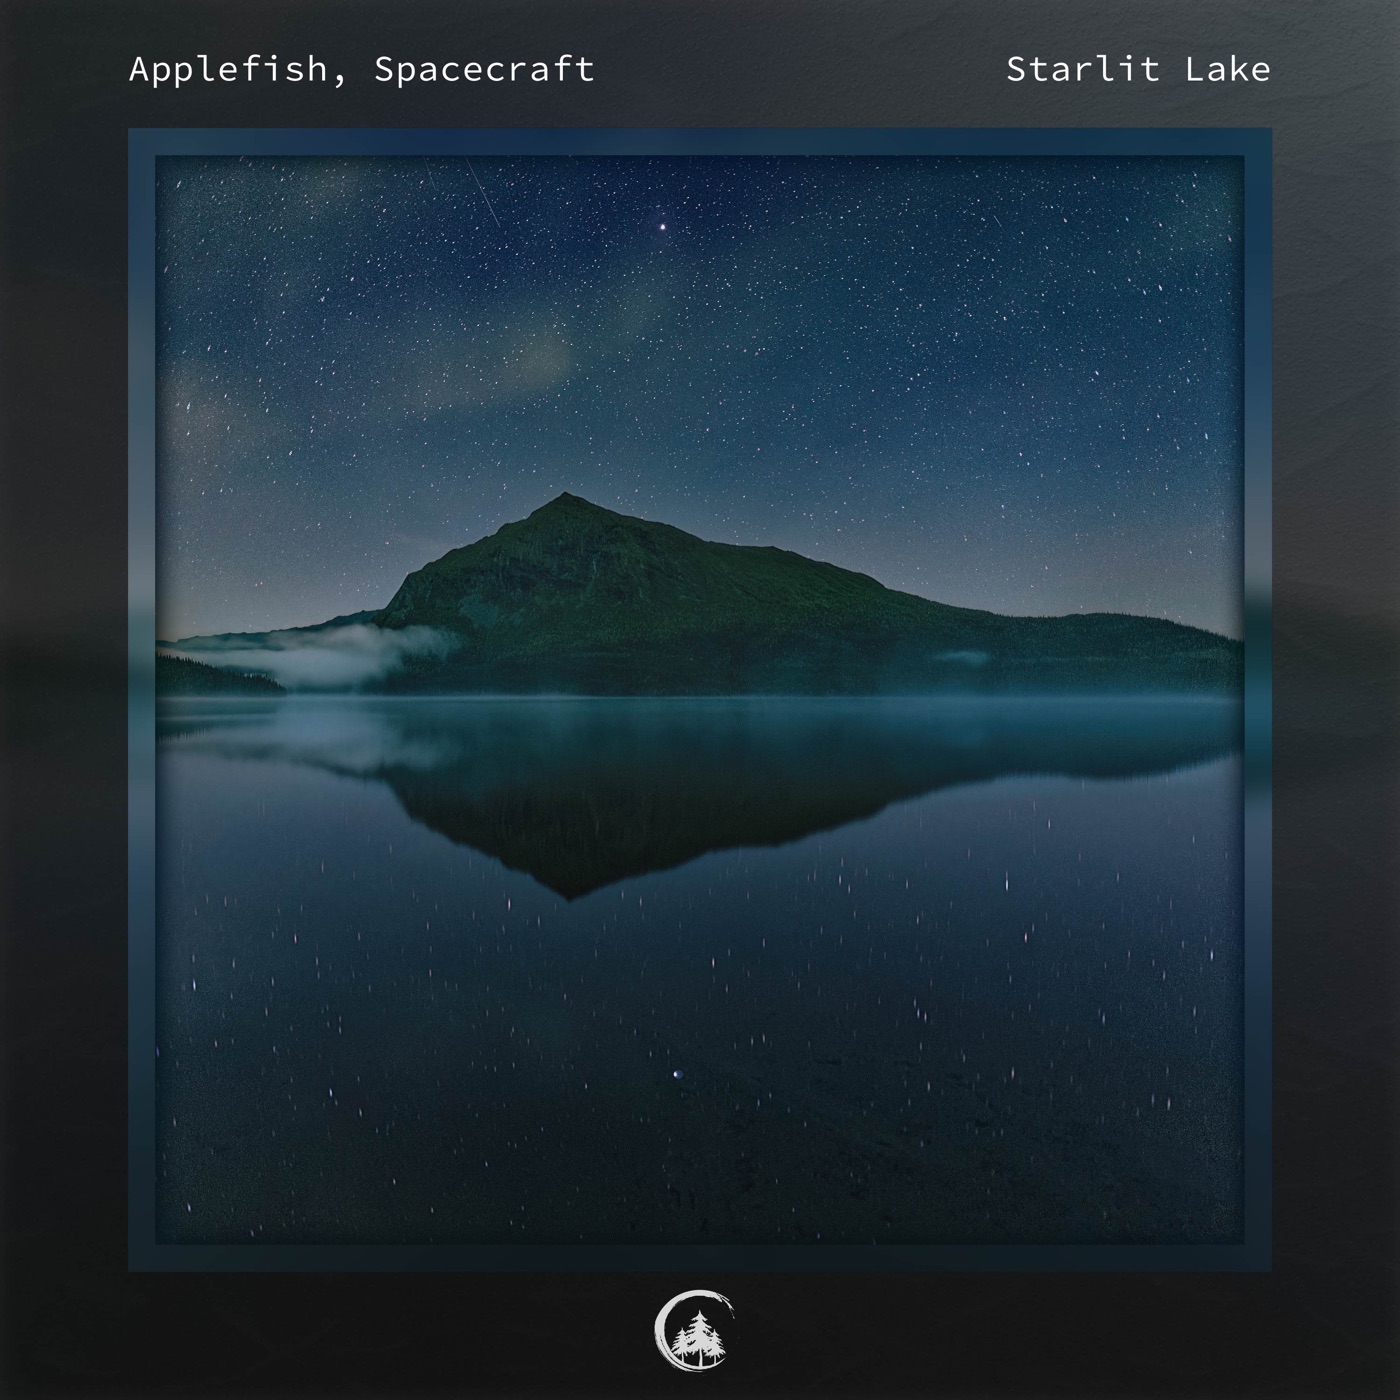 Starlit Lake by Applefish, Spacecraft